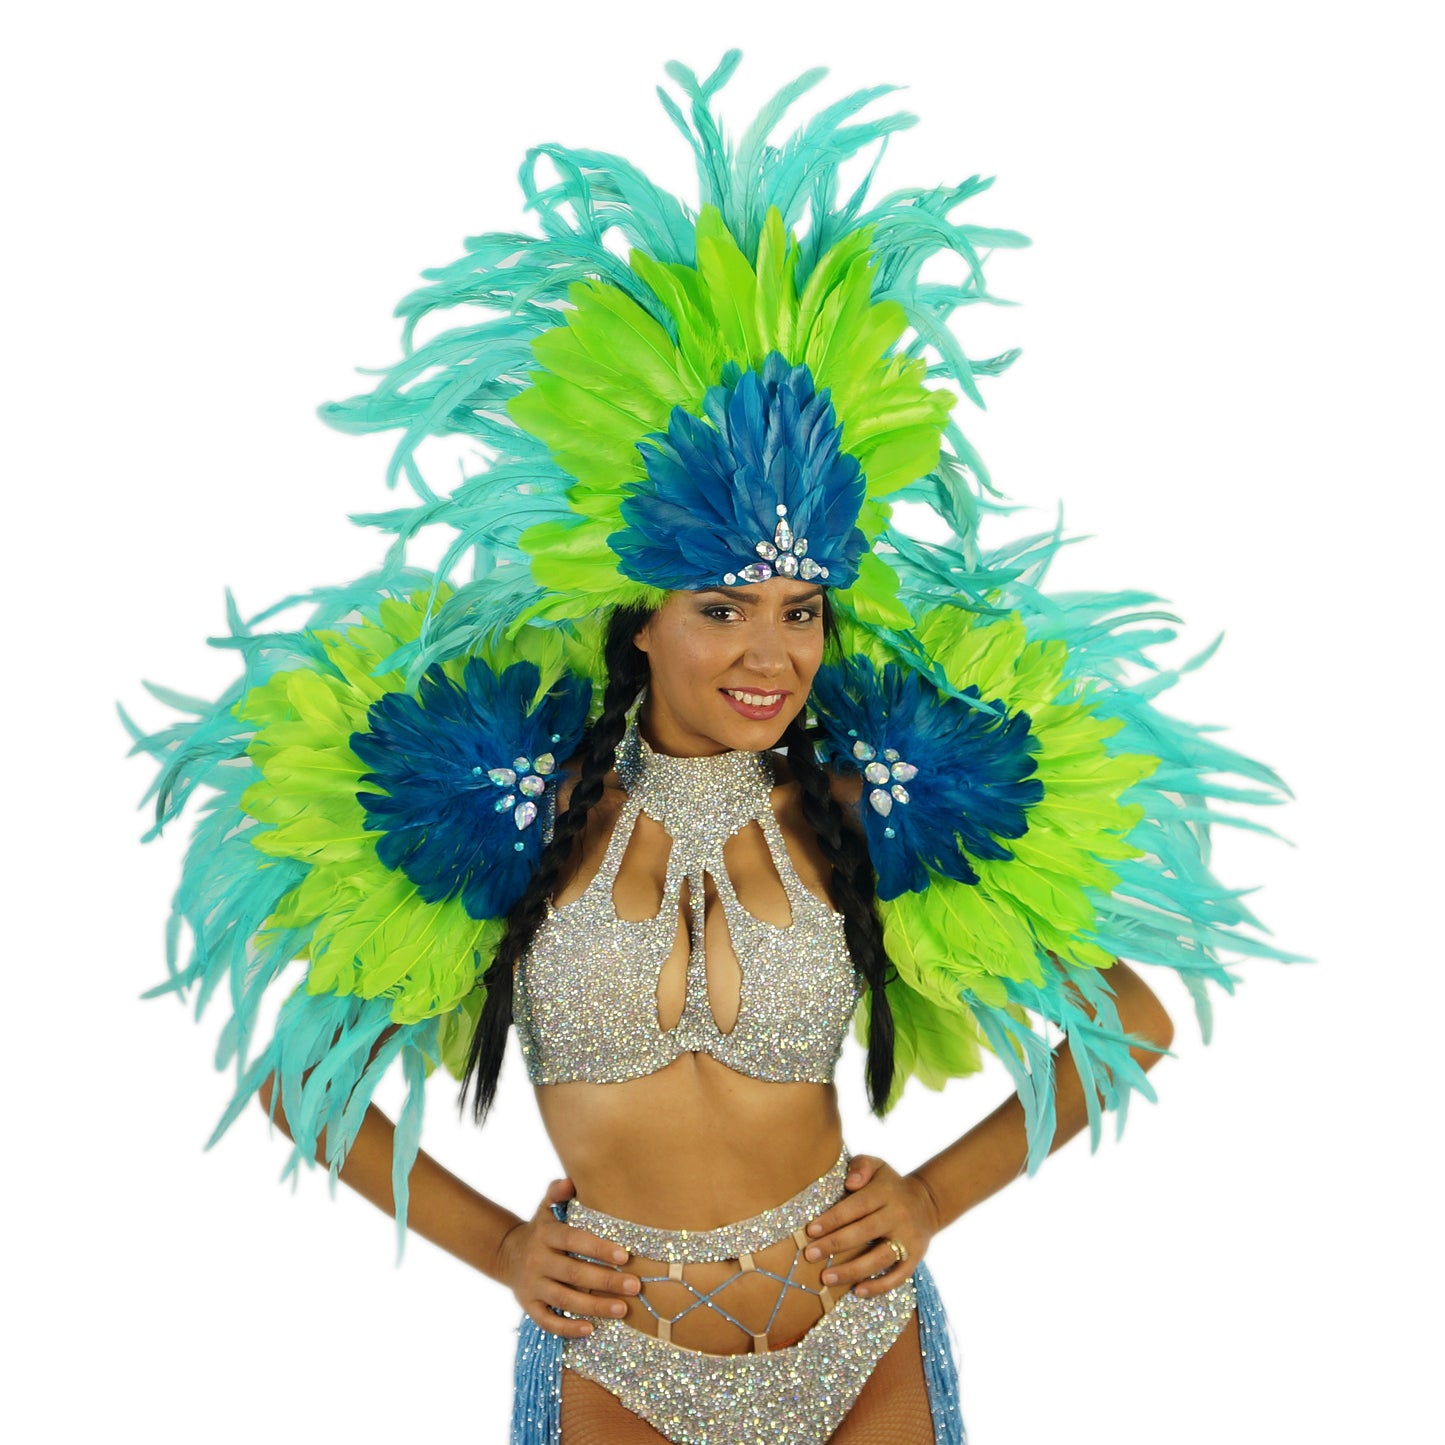 Carnival Princess Headdress